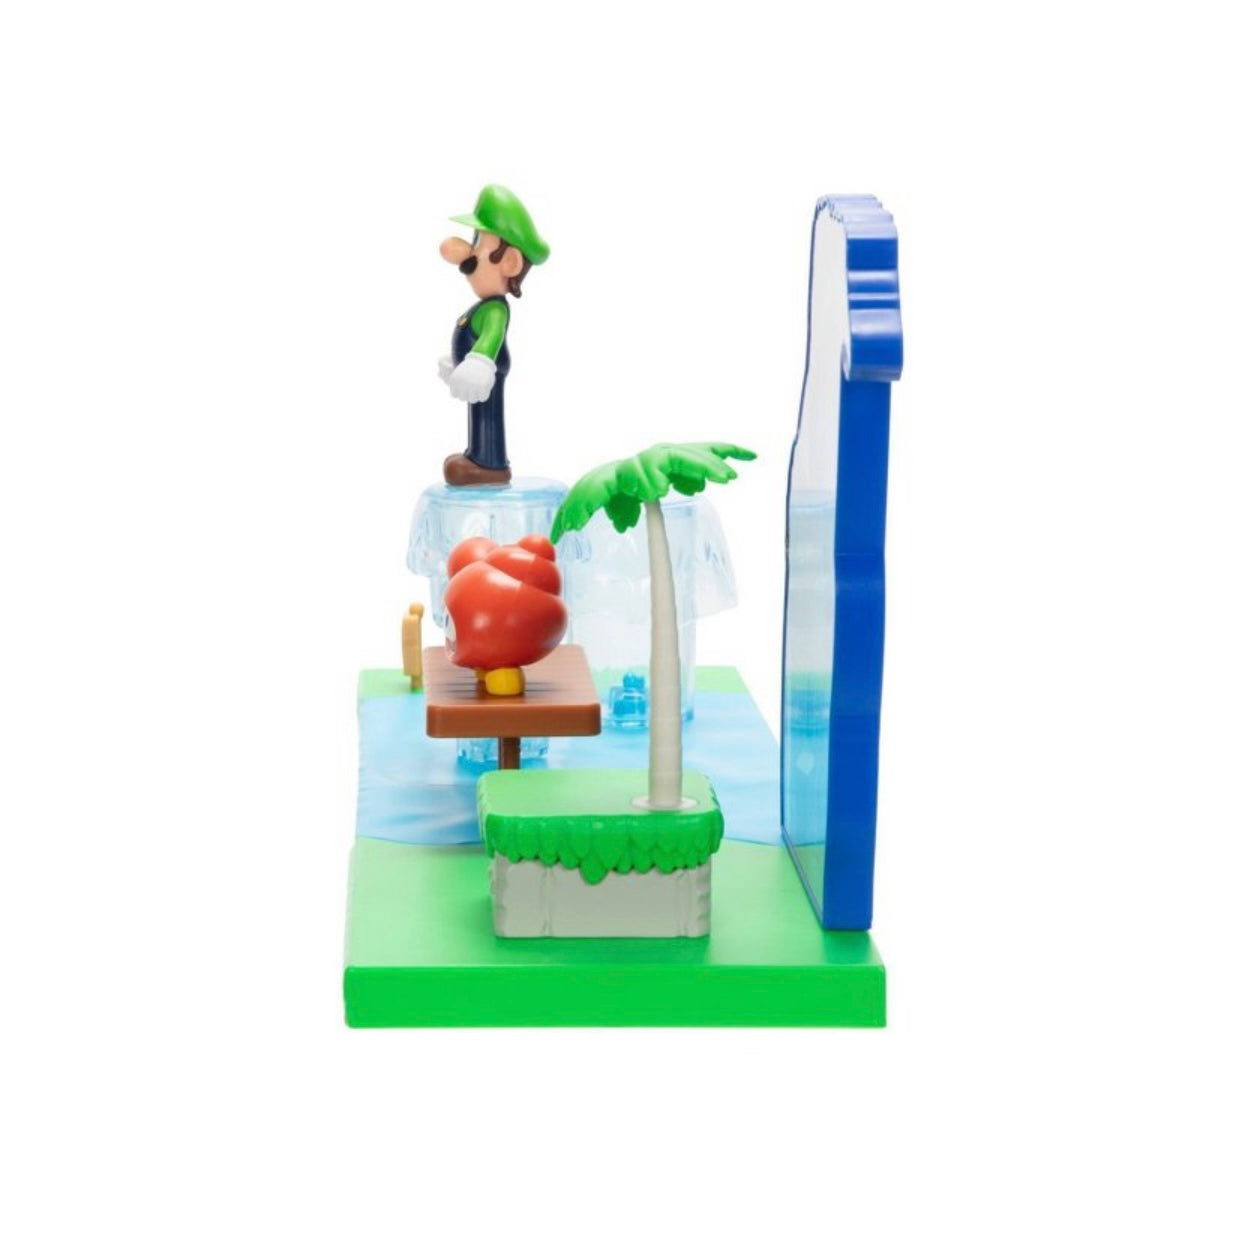 Nintendo Super Mario Sparkling Waters Playset Luigi and Huckit Crab